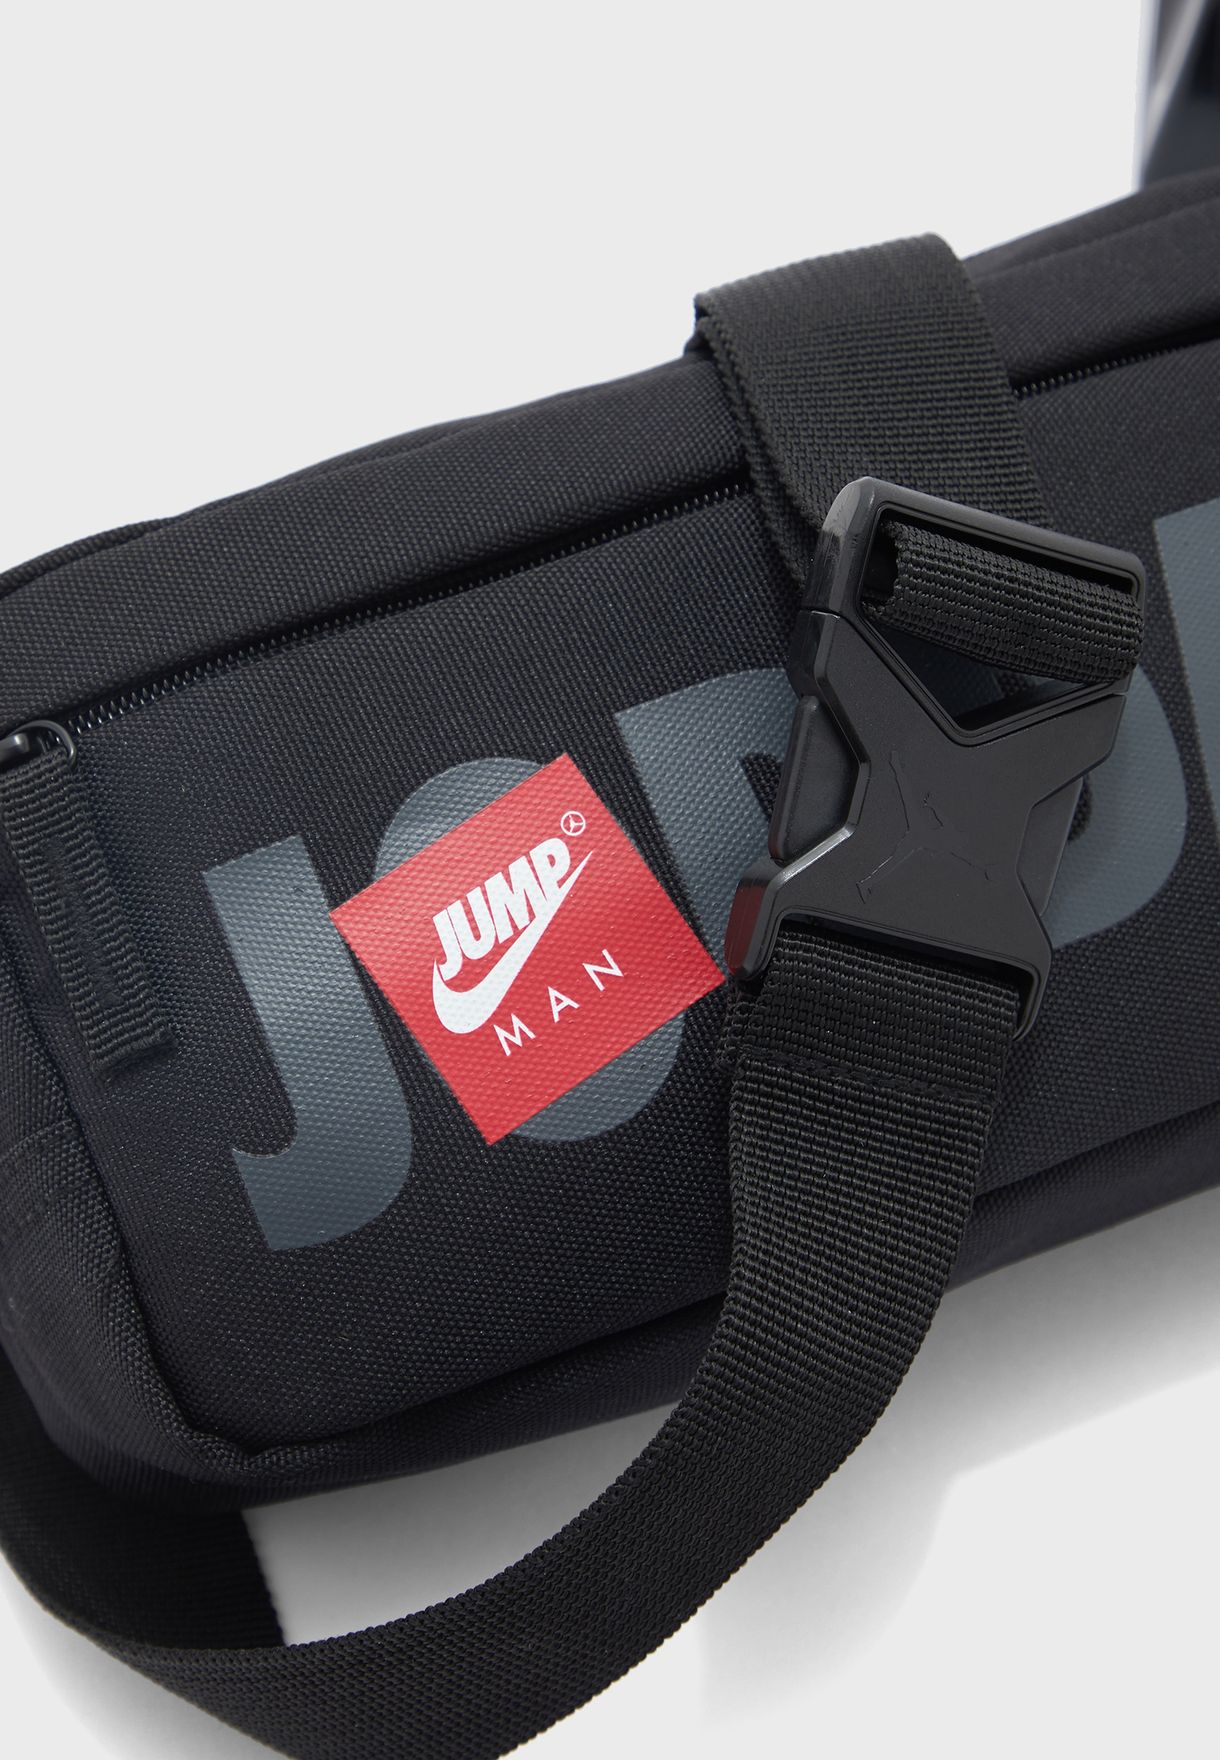 Jordan Jumpman Colour Block Waist Bag 